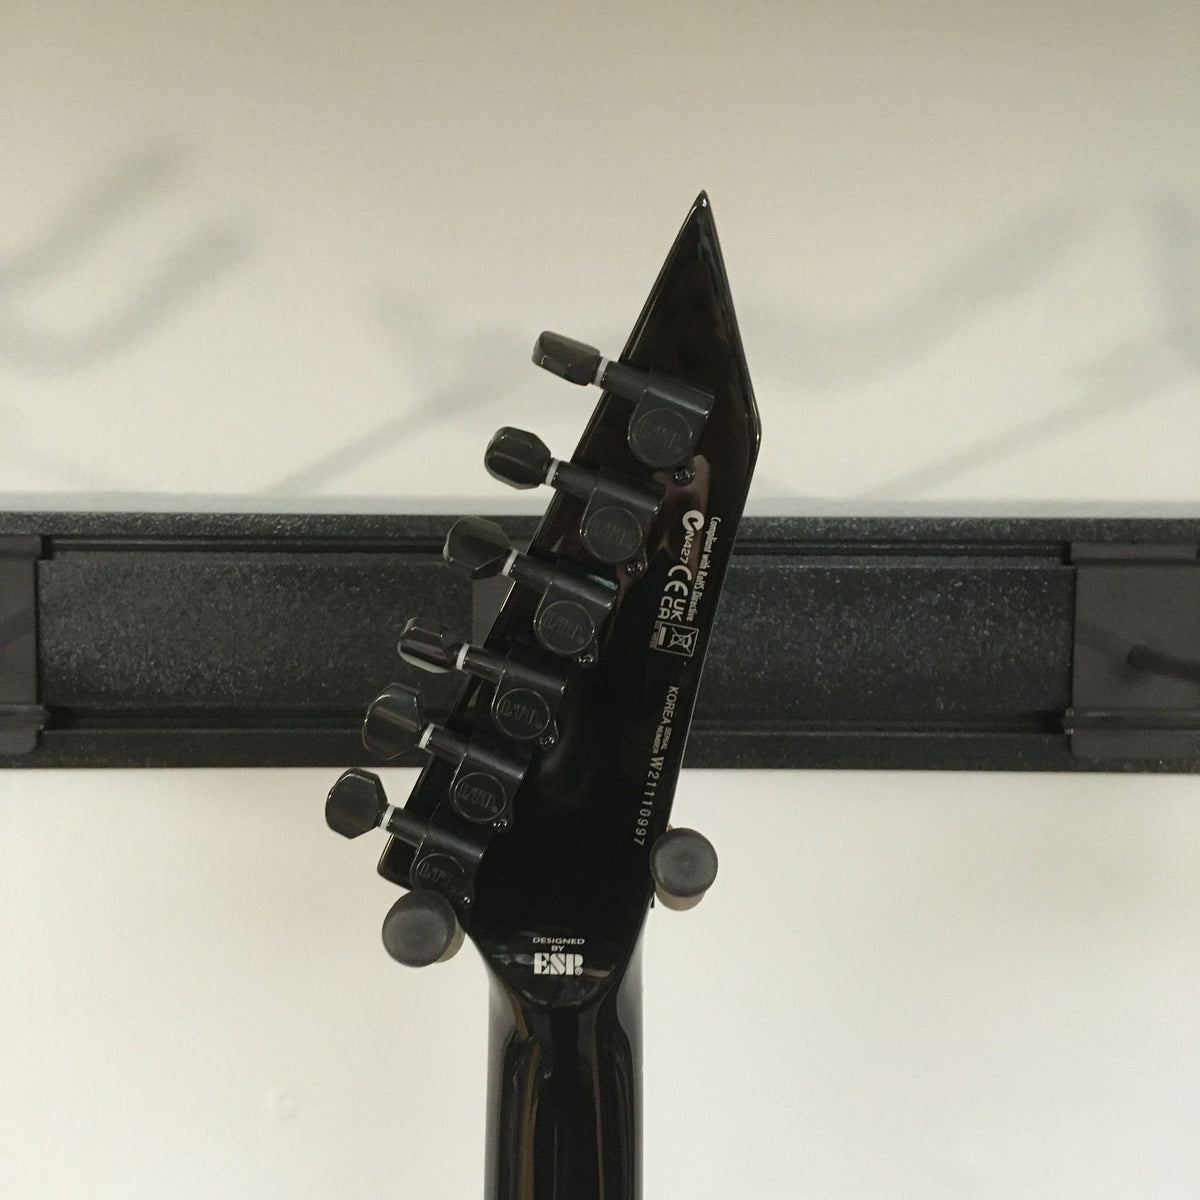 ESP LTD Kirk Hammett Signature KH-602 Black Guitars on Main